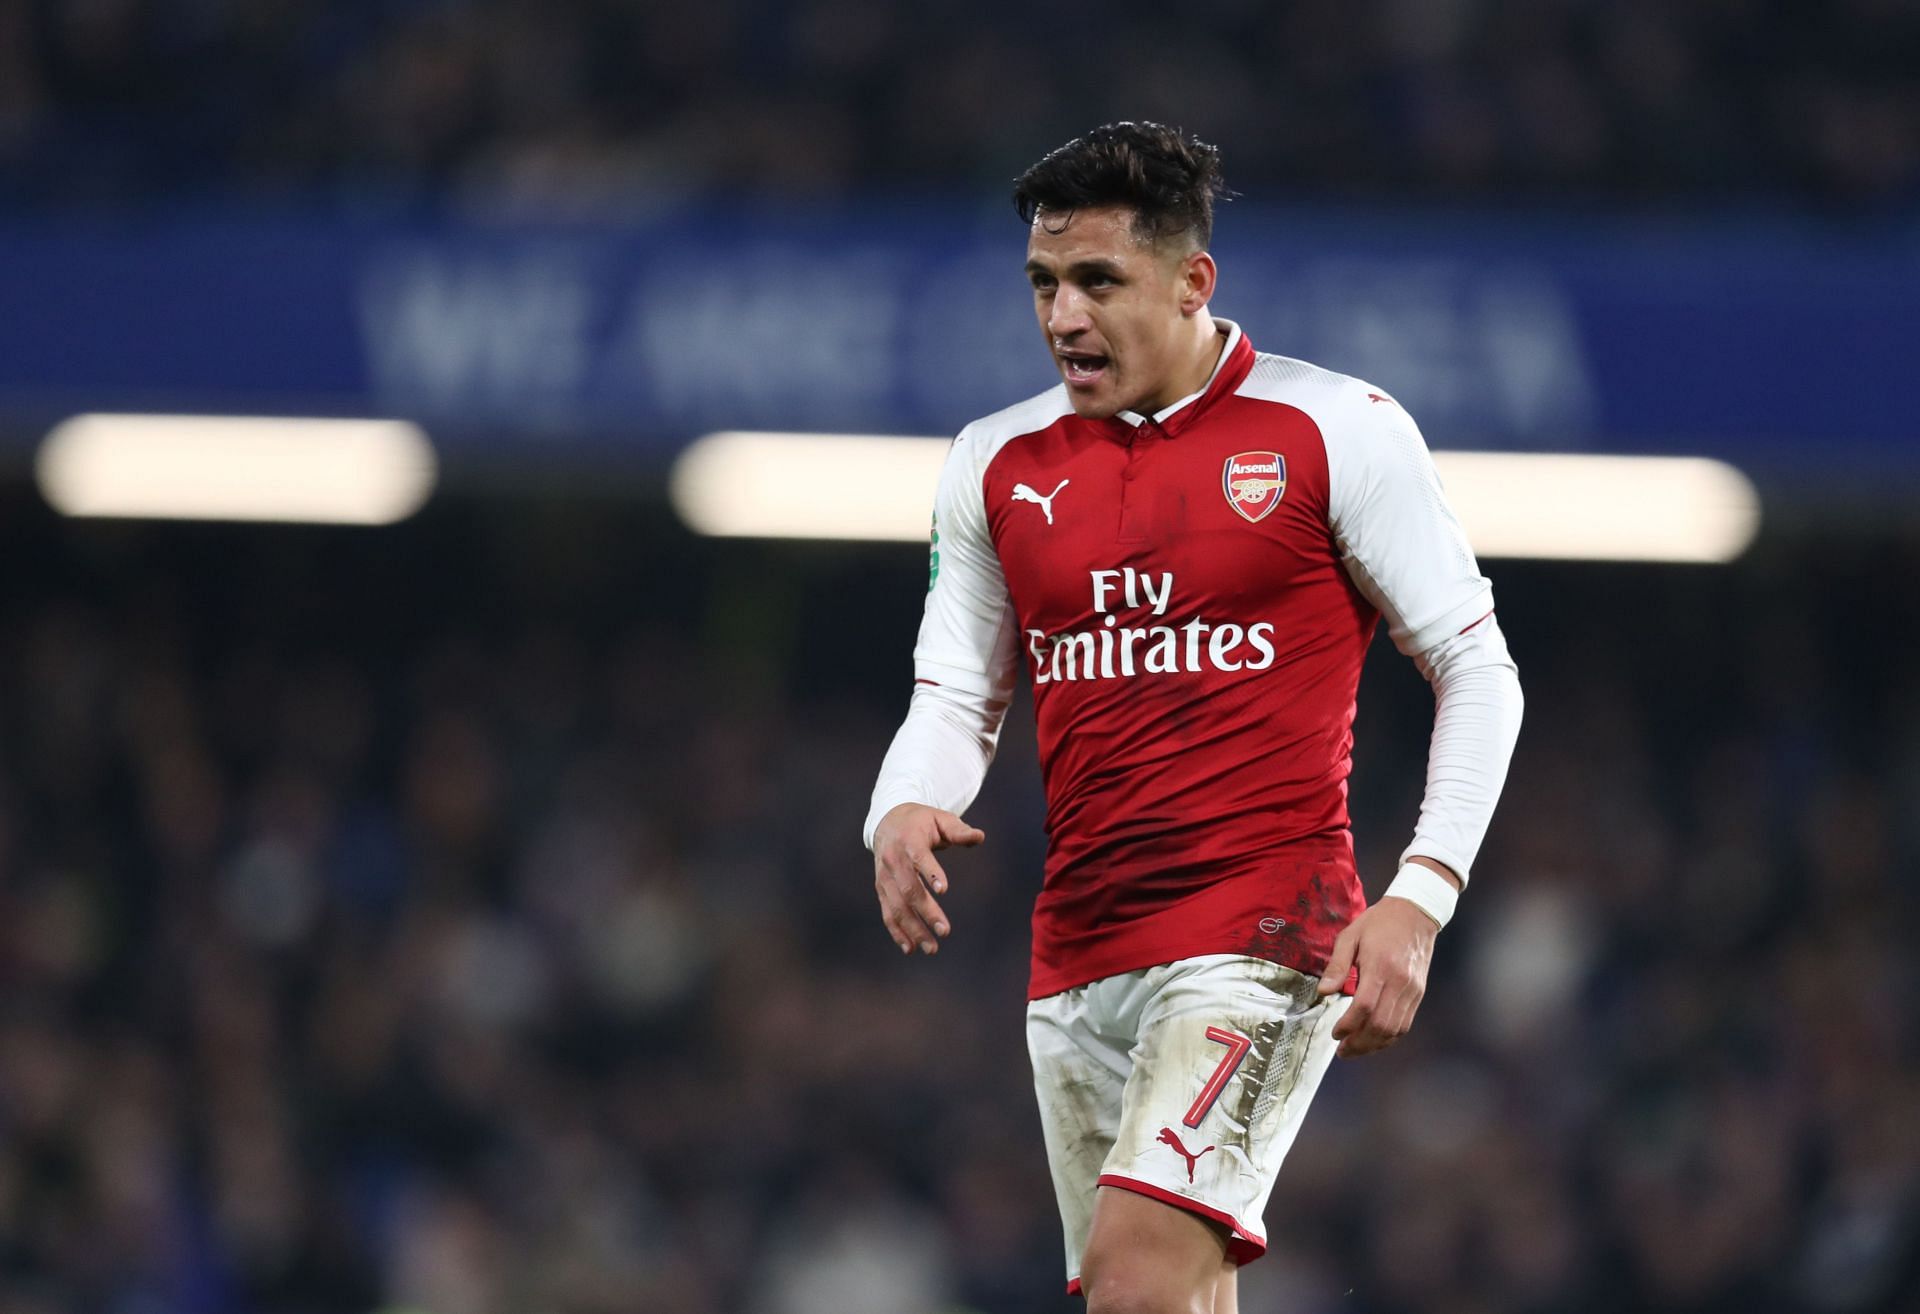 Sanchez chose Arsenal as he preferred living in London